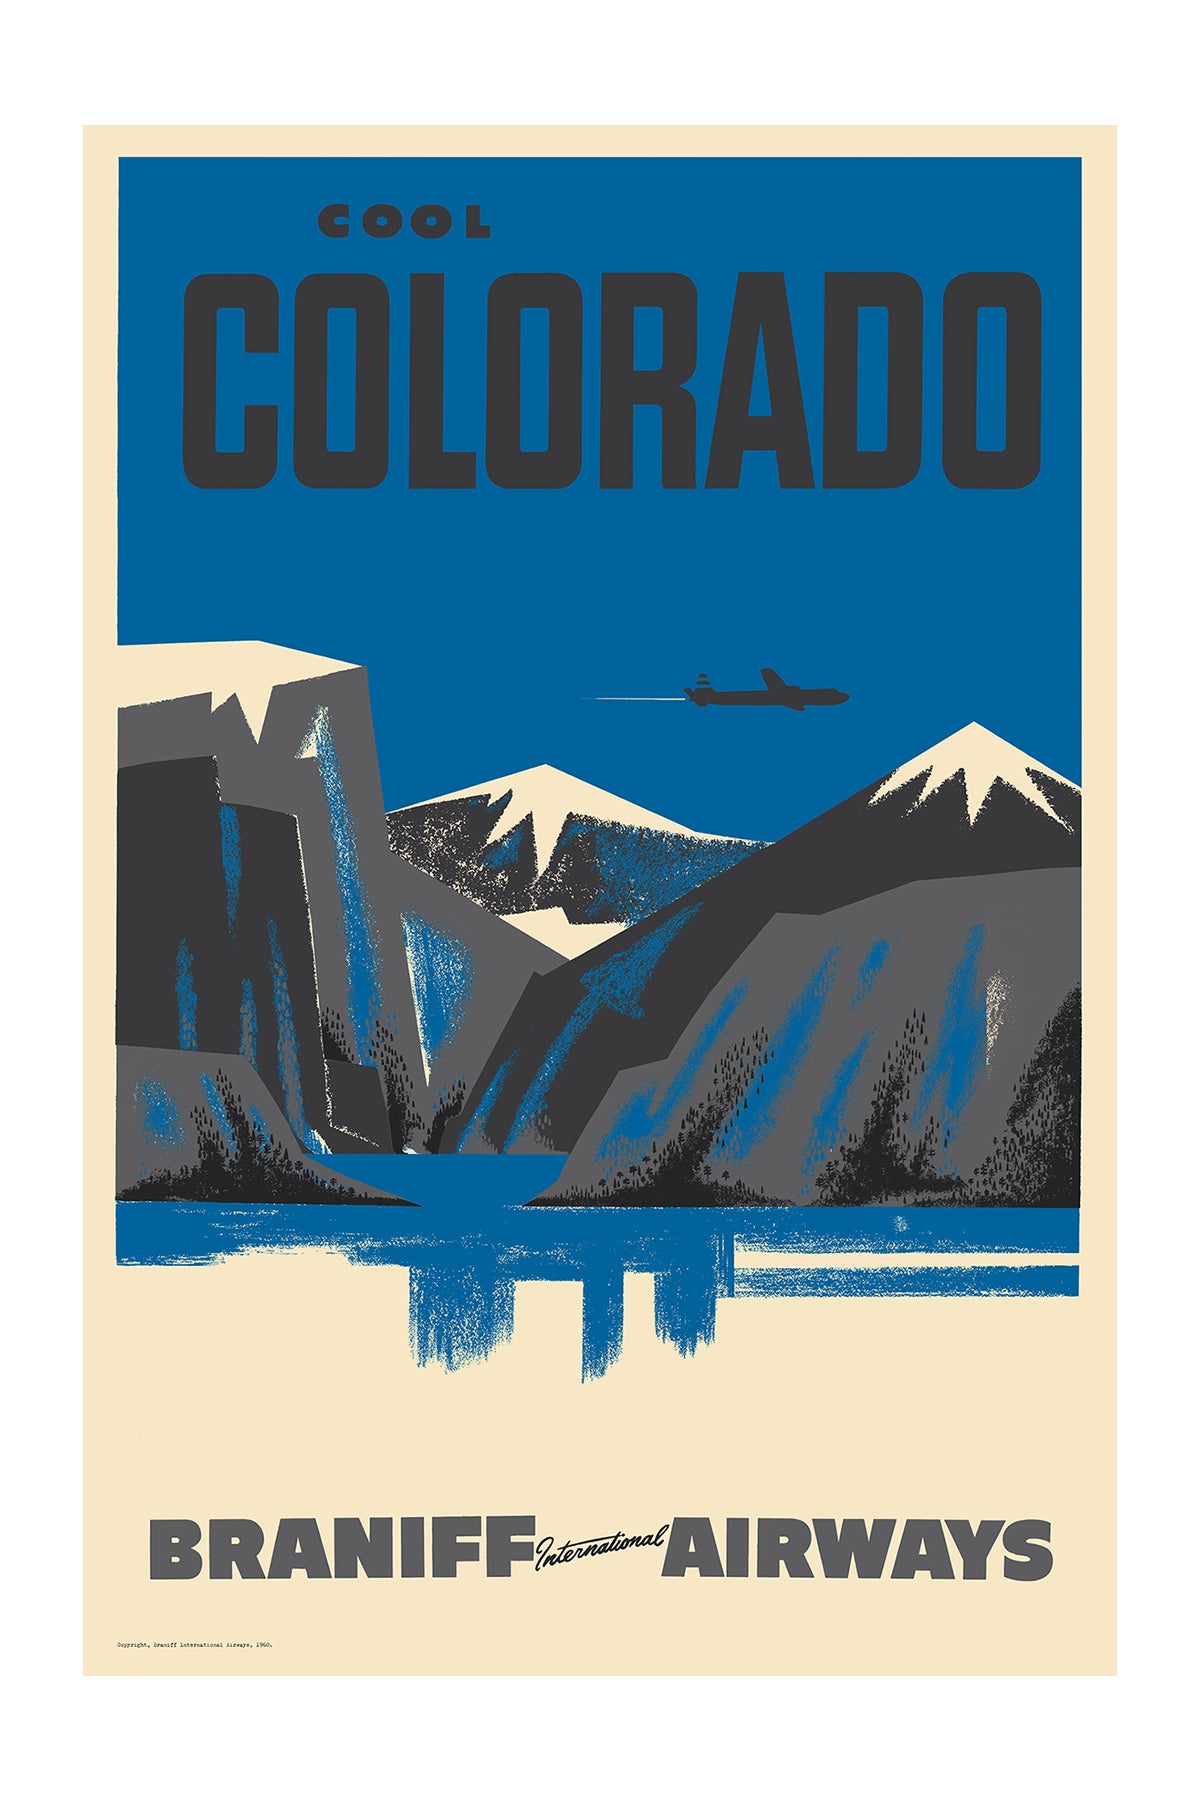 Cool Colorado, Braniff International Airways, 1950s [Mountain Range].